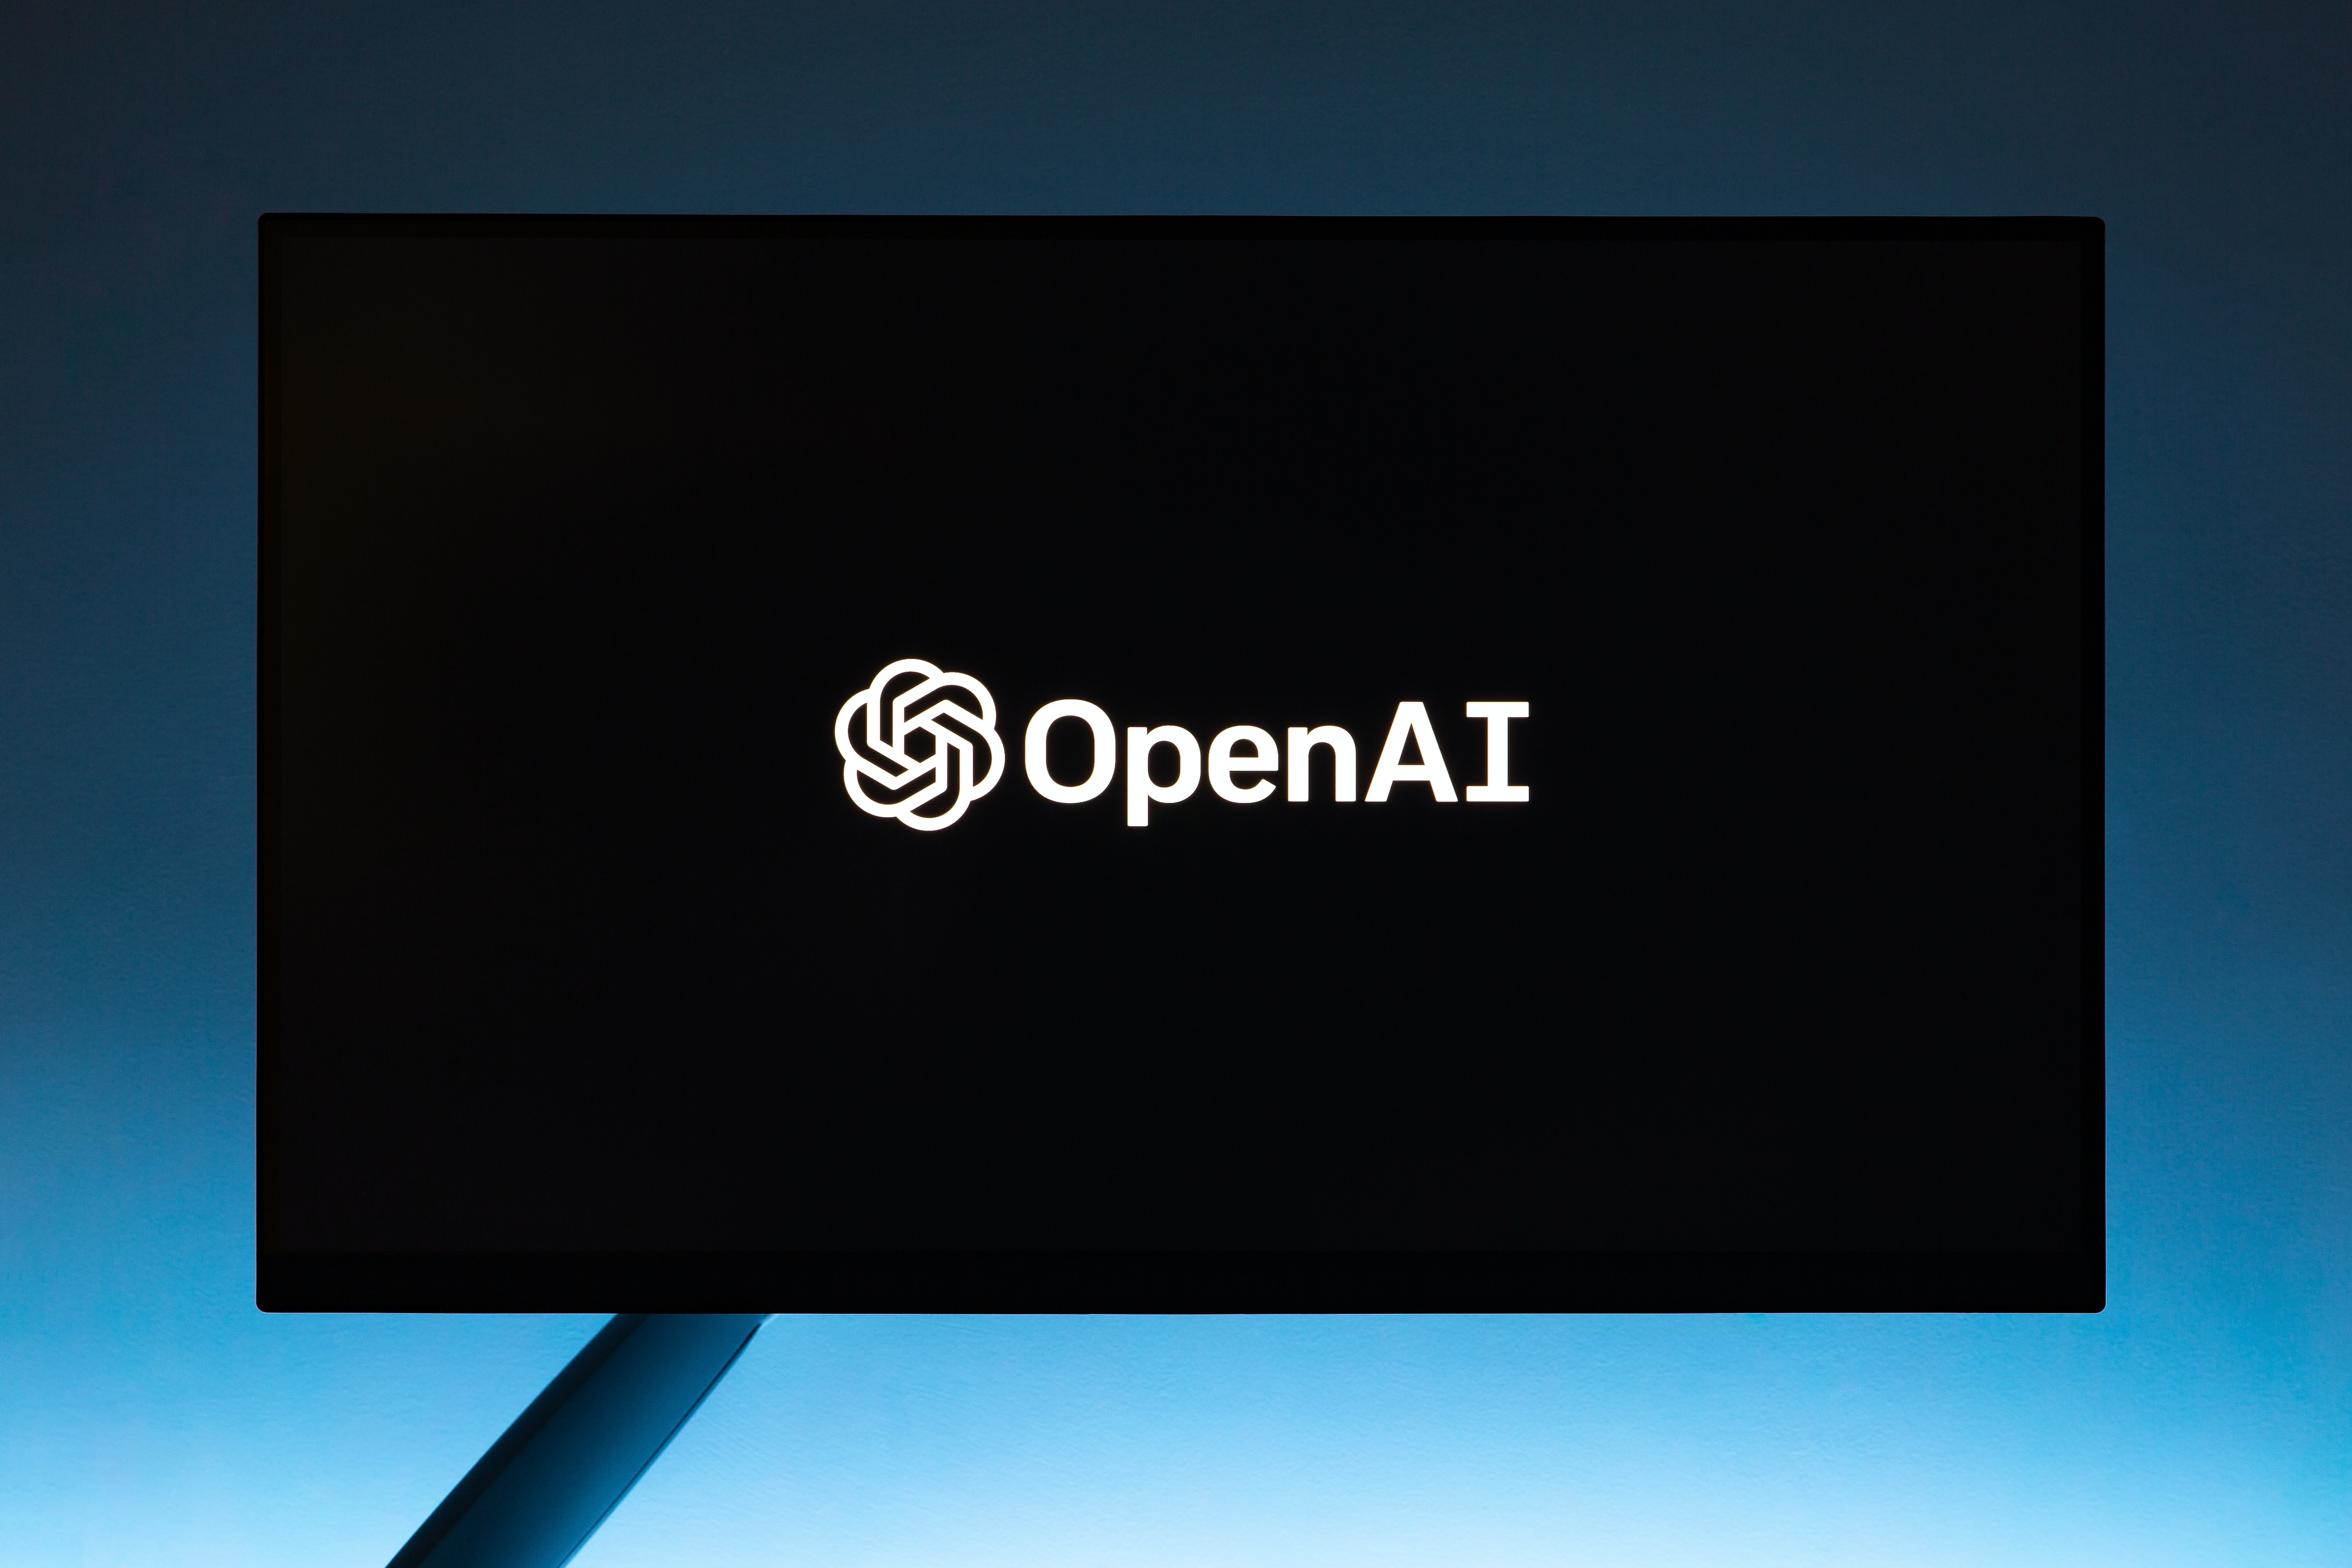 open ai logo on a black background